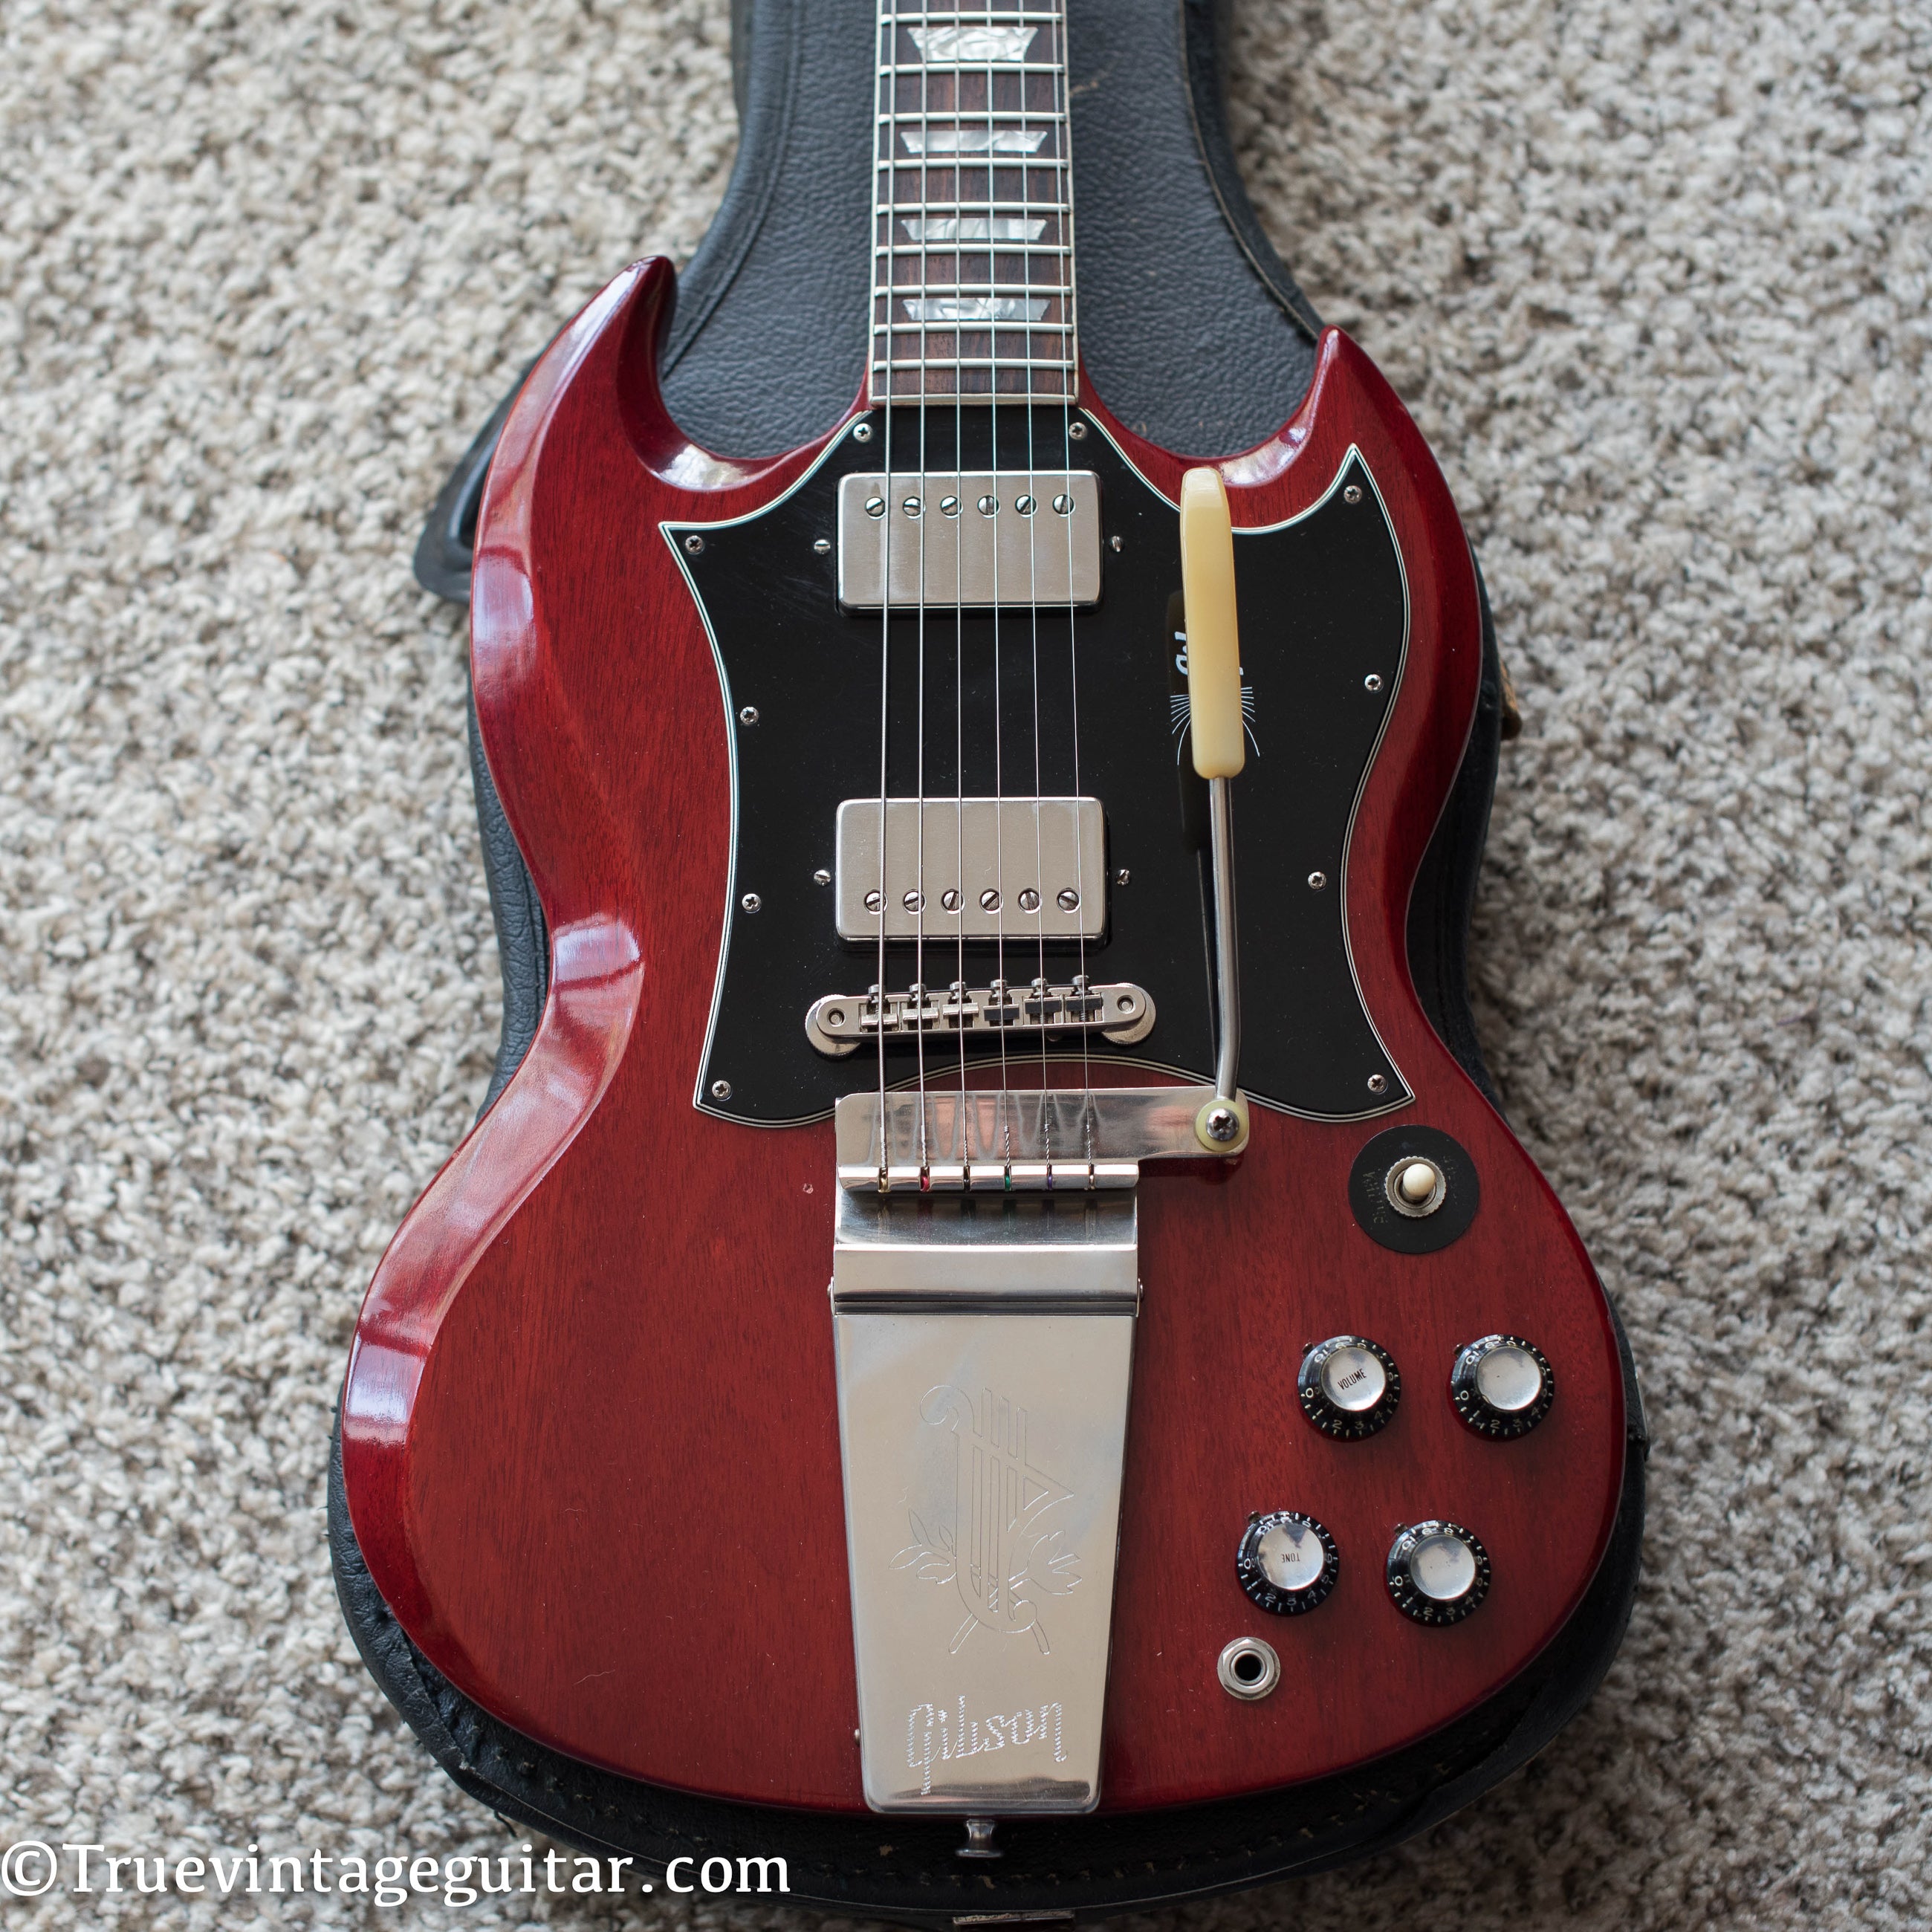 Vintage 1968 Gibson SG Standard guitar